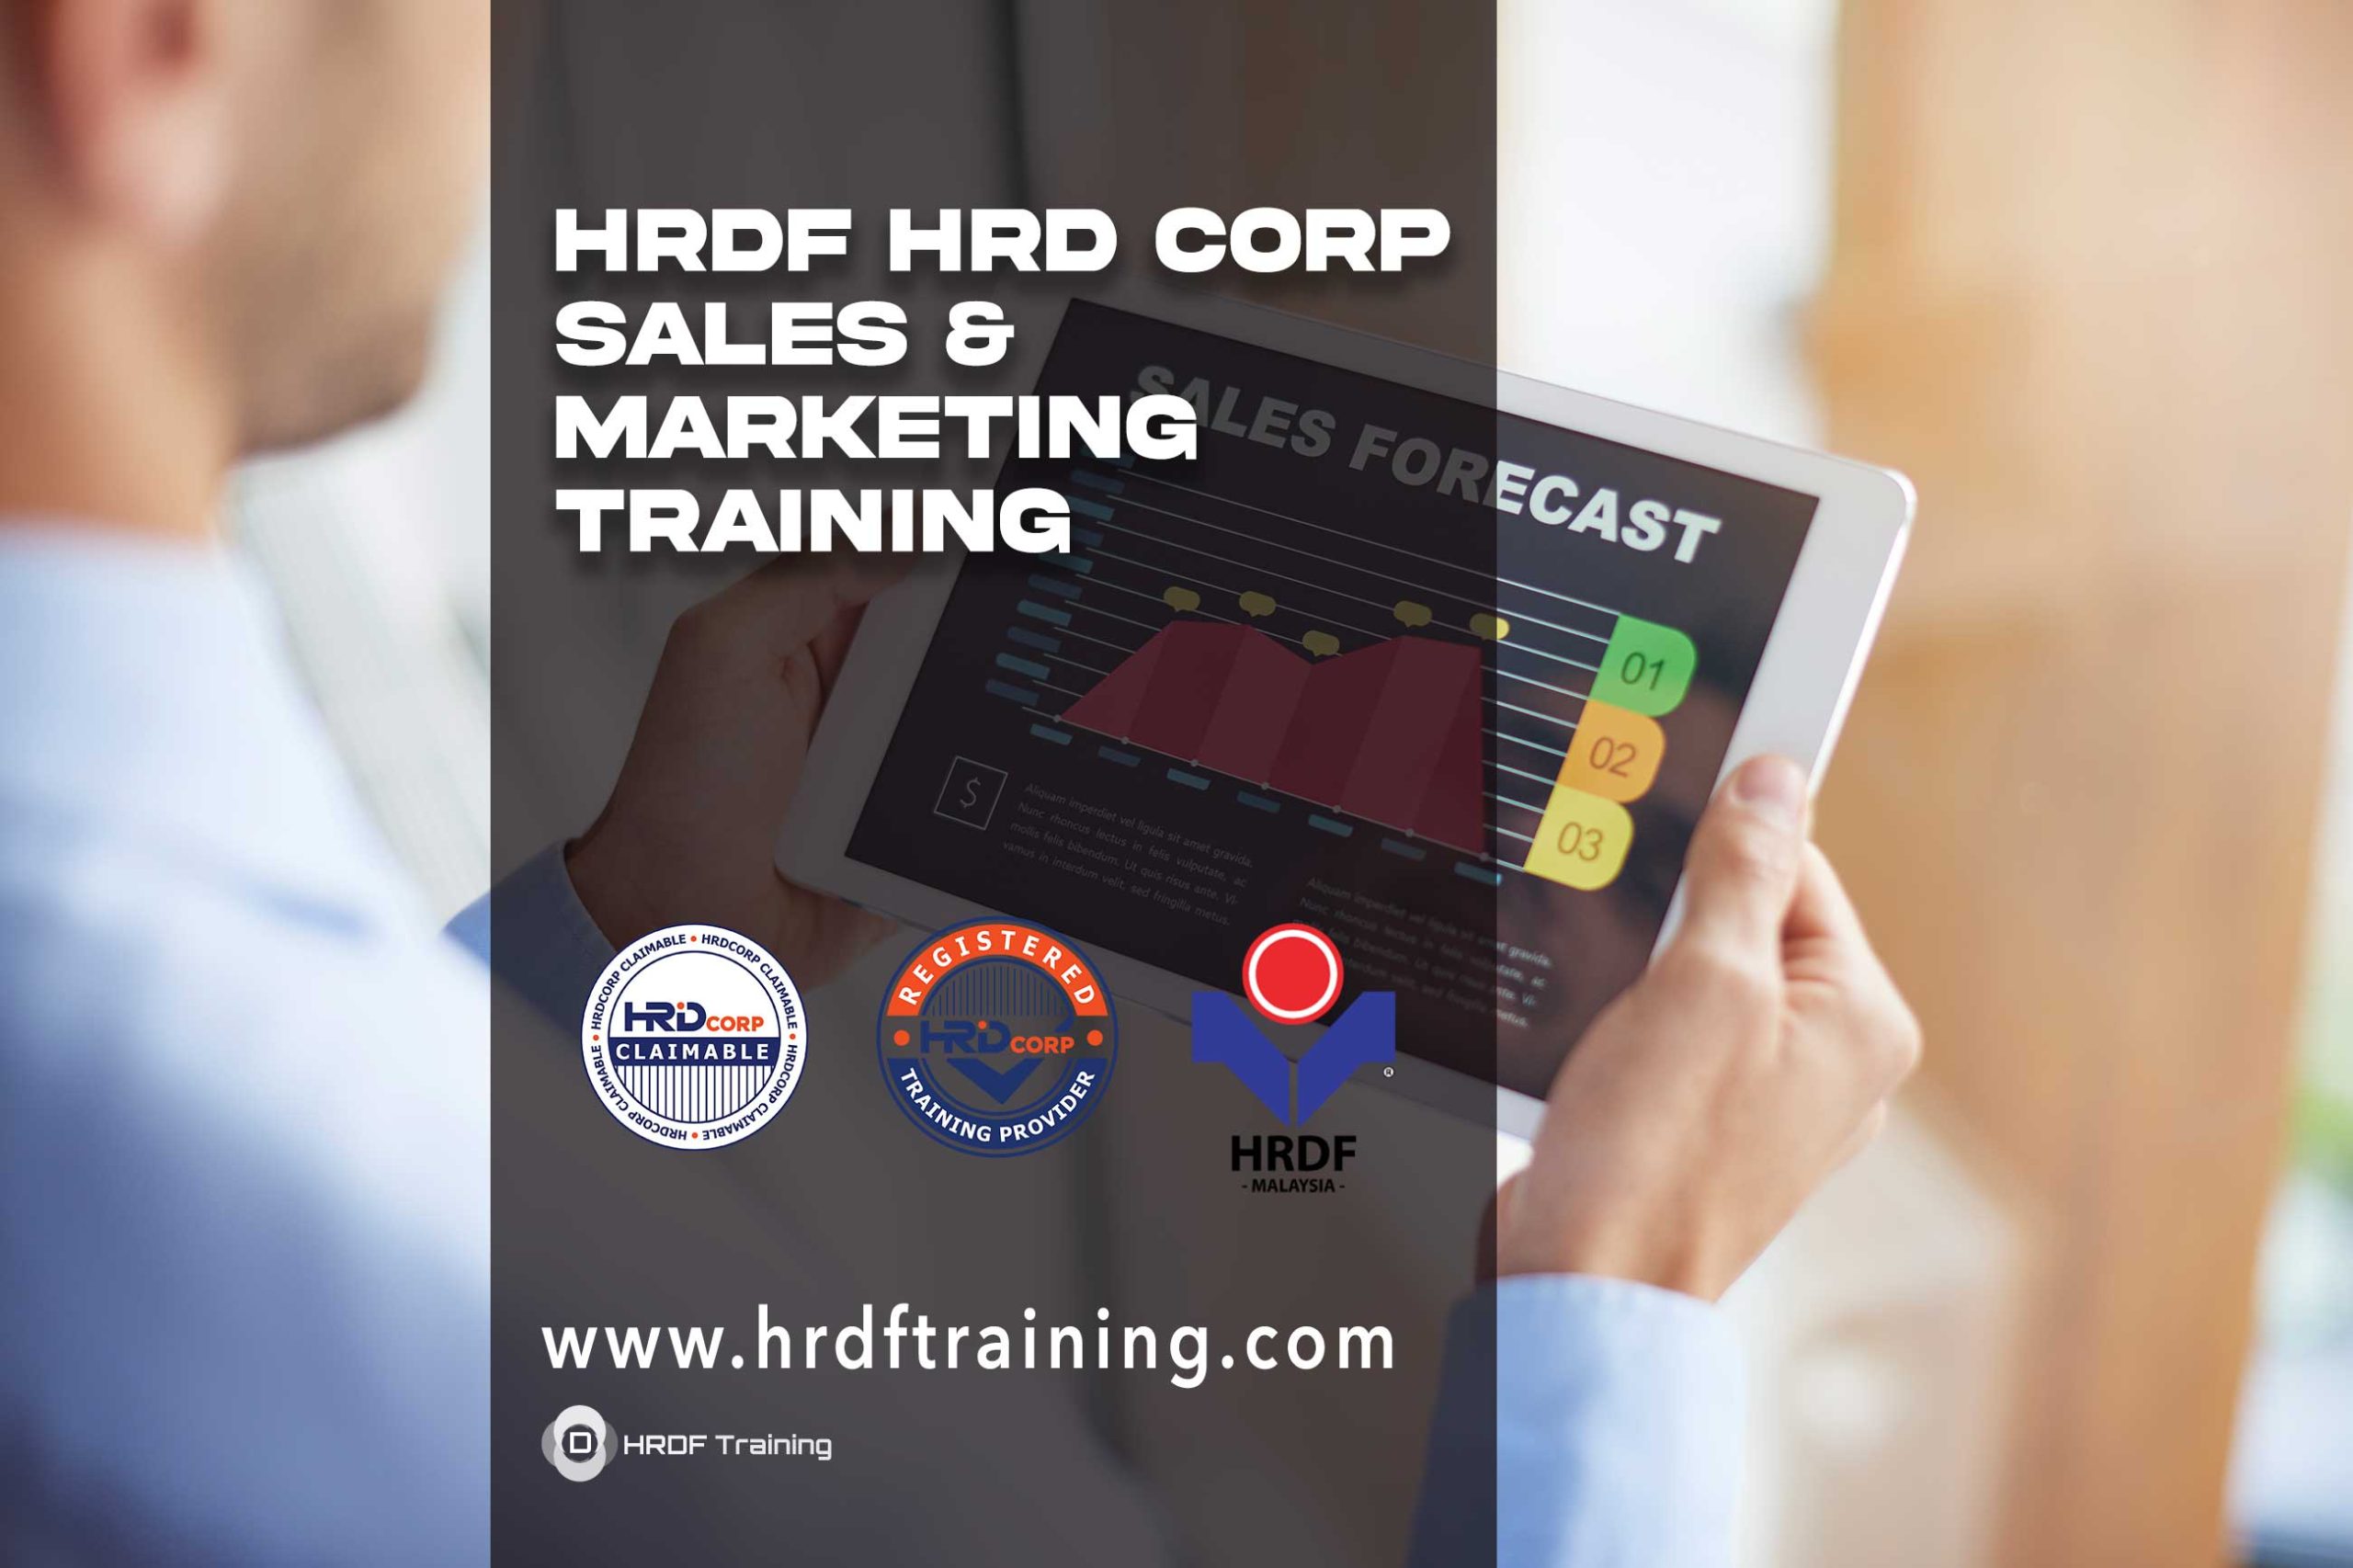 HRDF HRD Corp Sales & Marketing Training